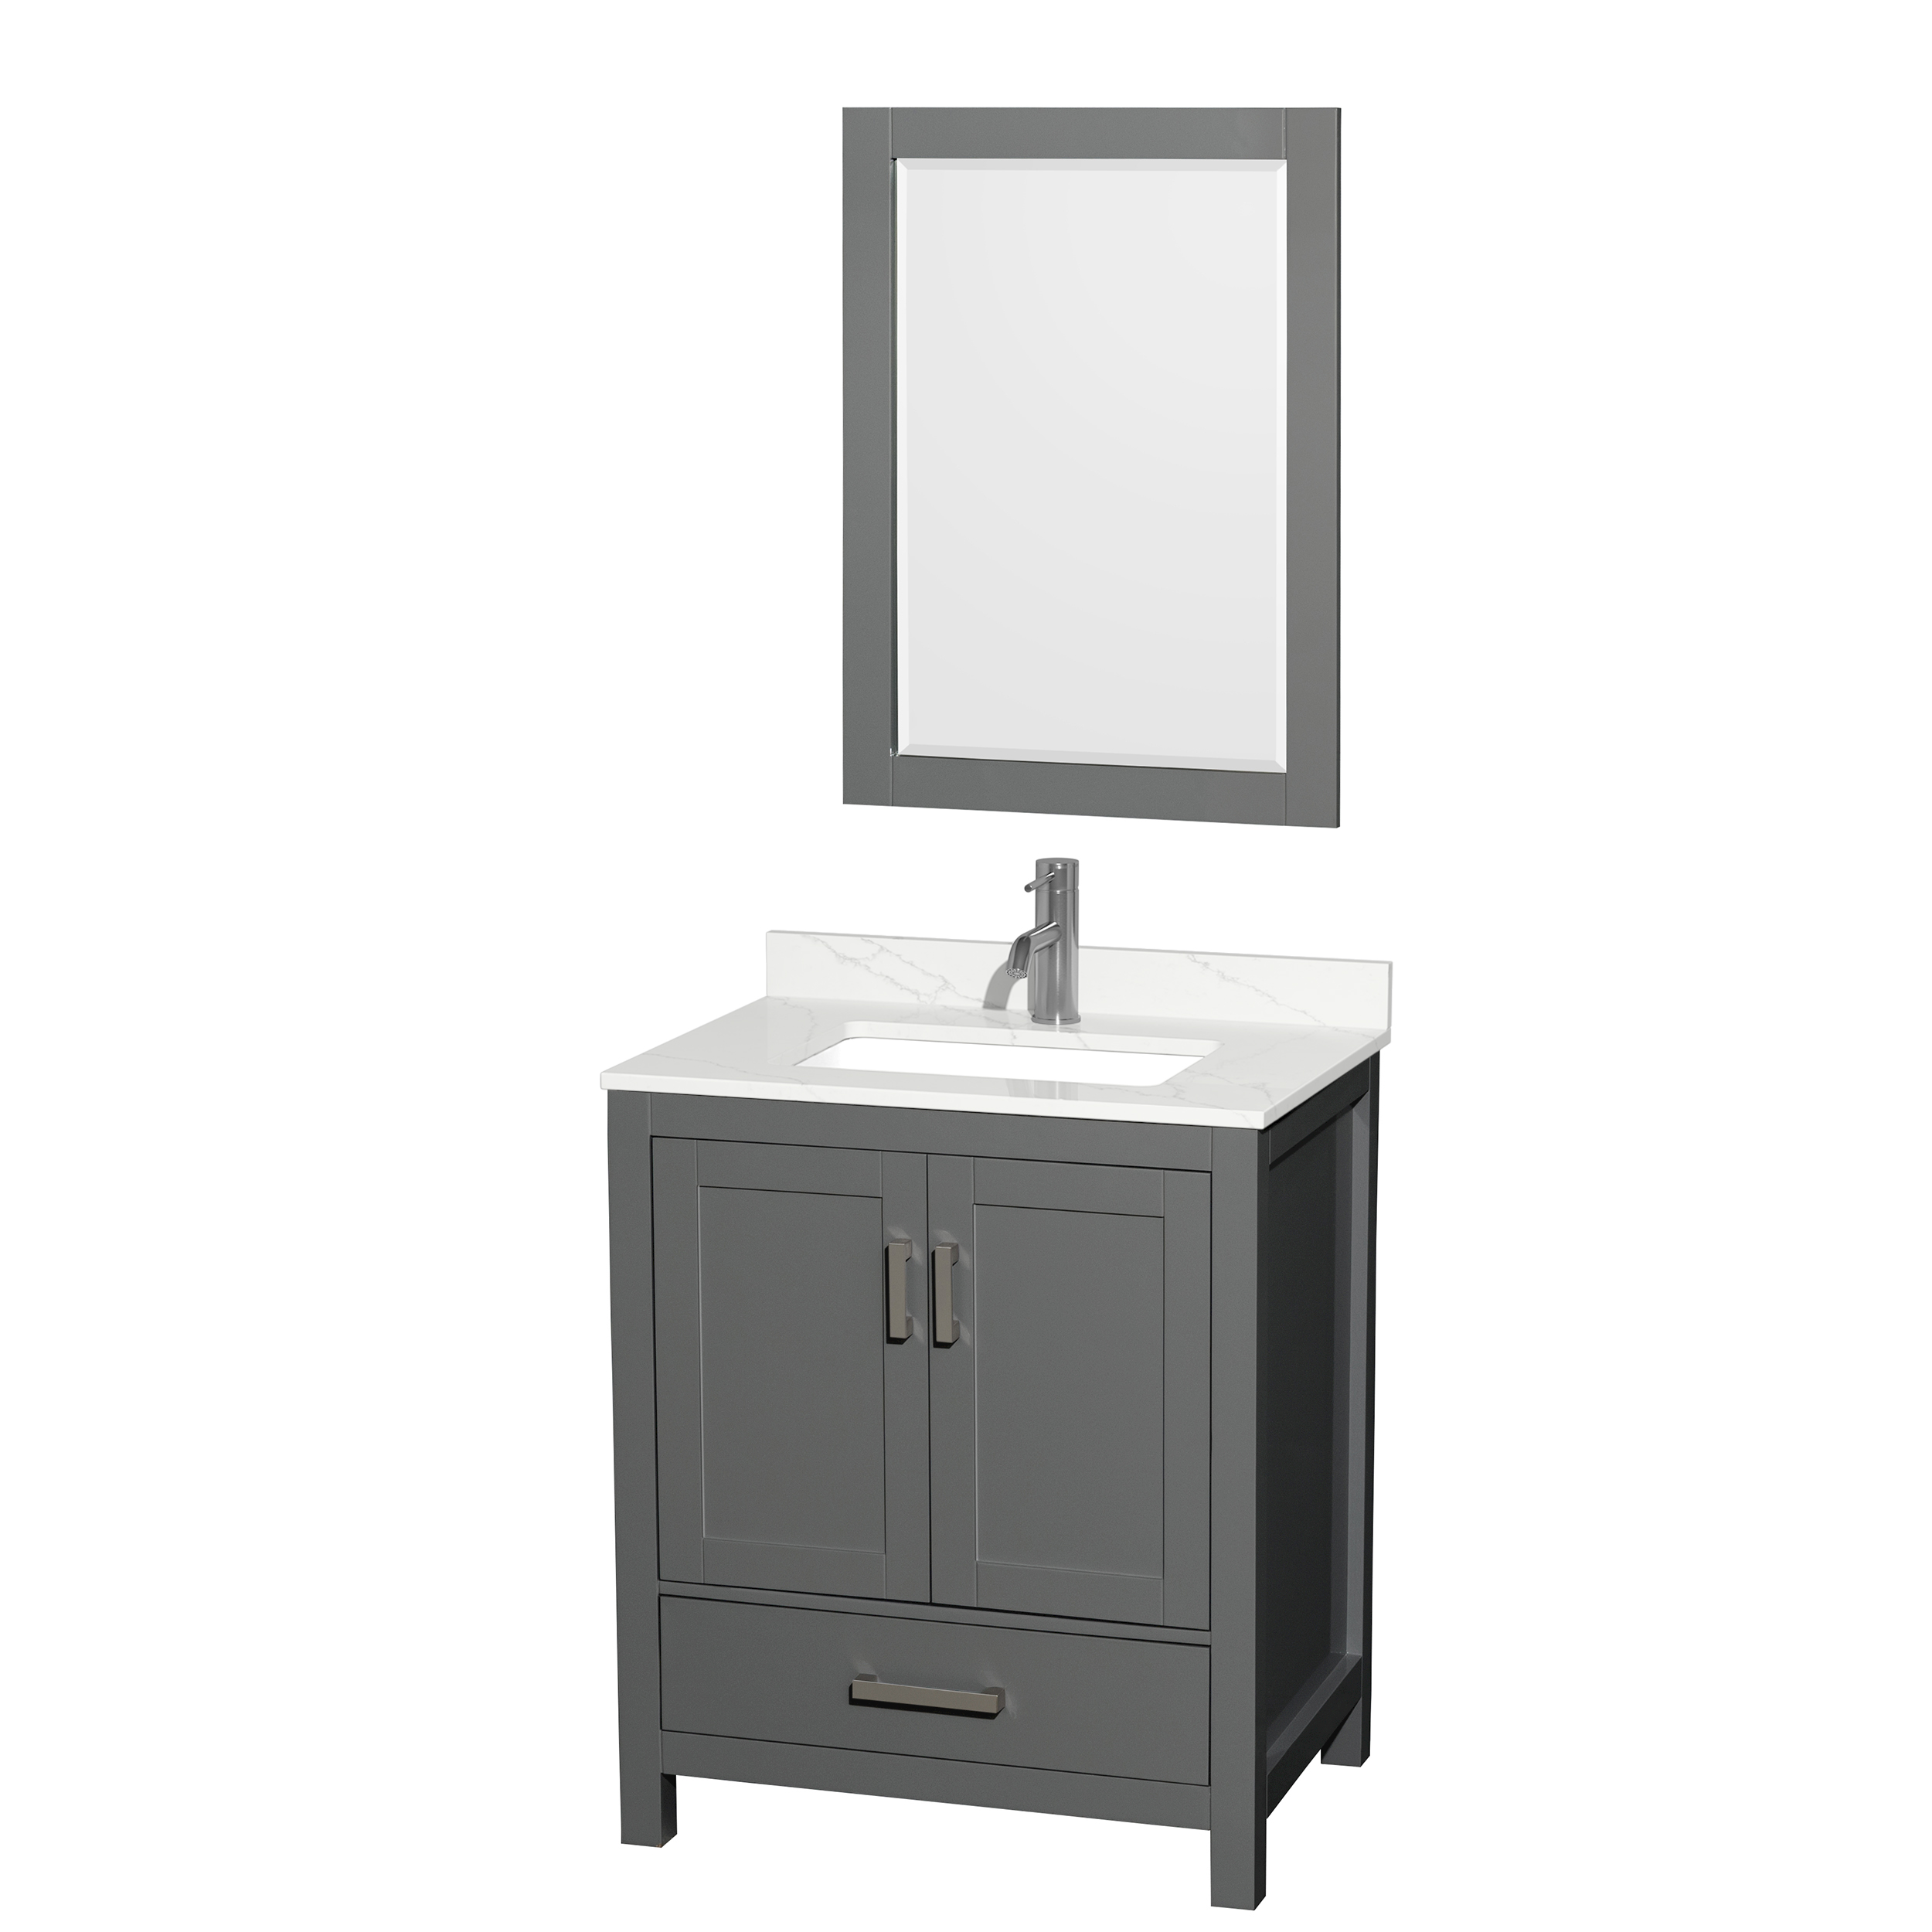 sheffield 30" single bathroom vanity by wyndham collection - dark gray